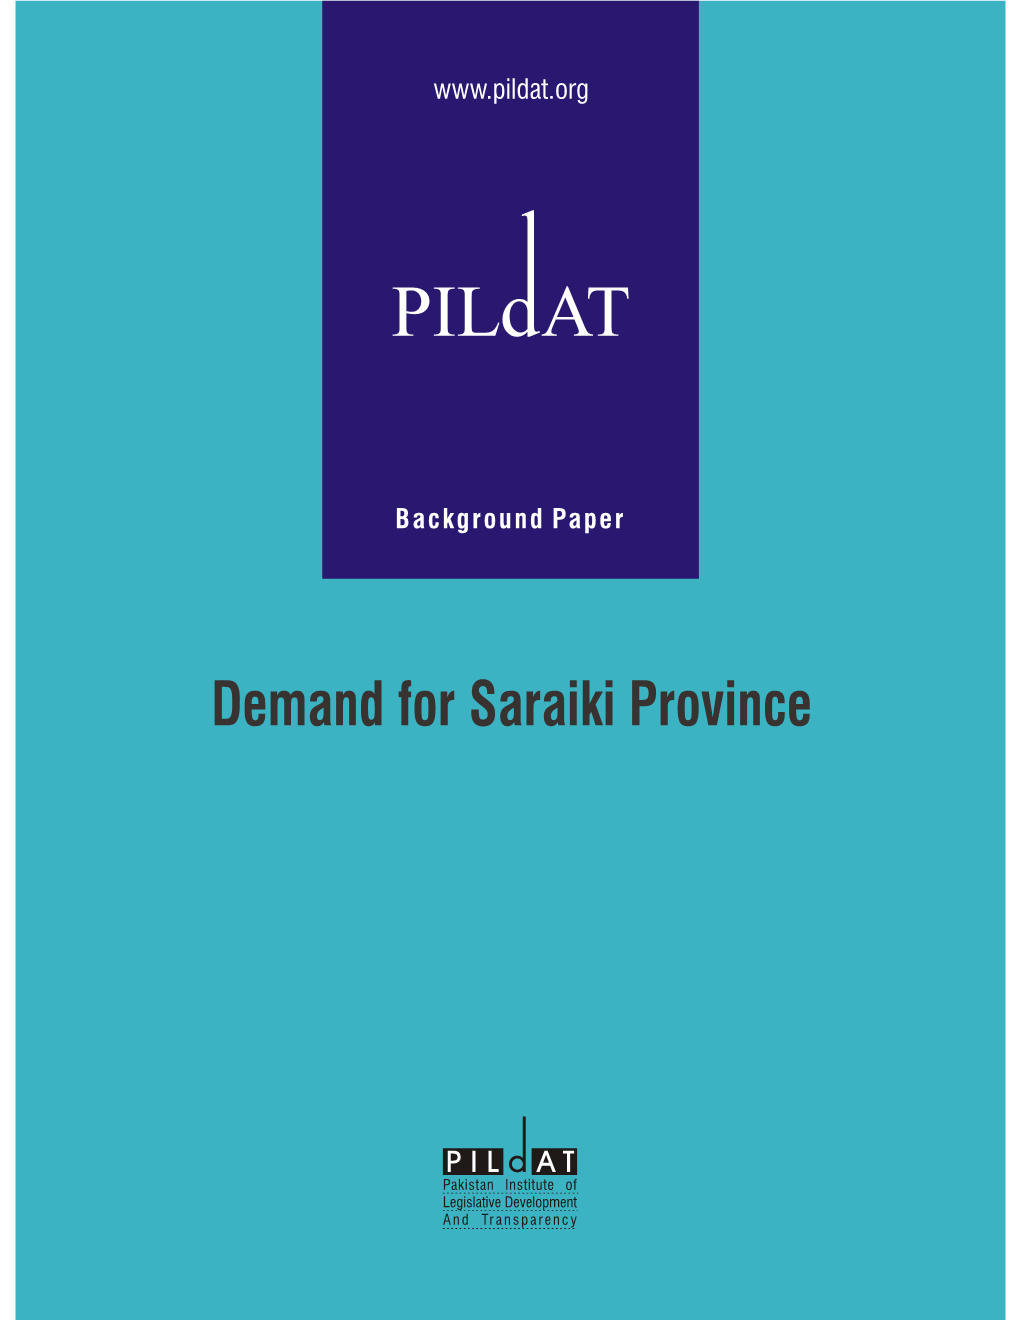 Demand for Saraiki Province Background Paper